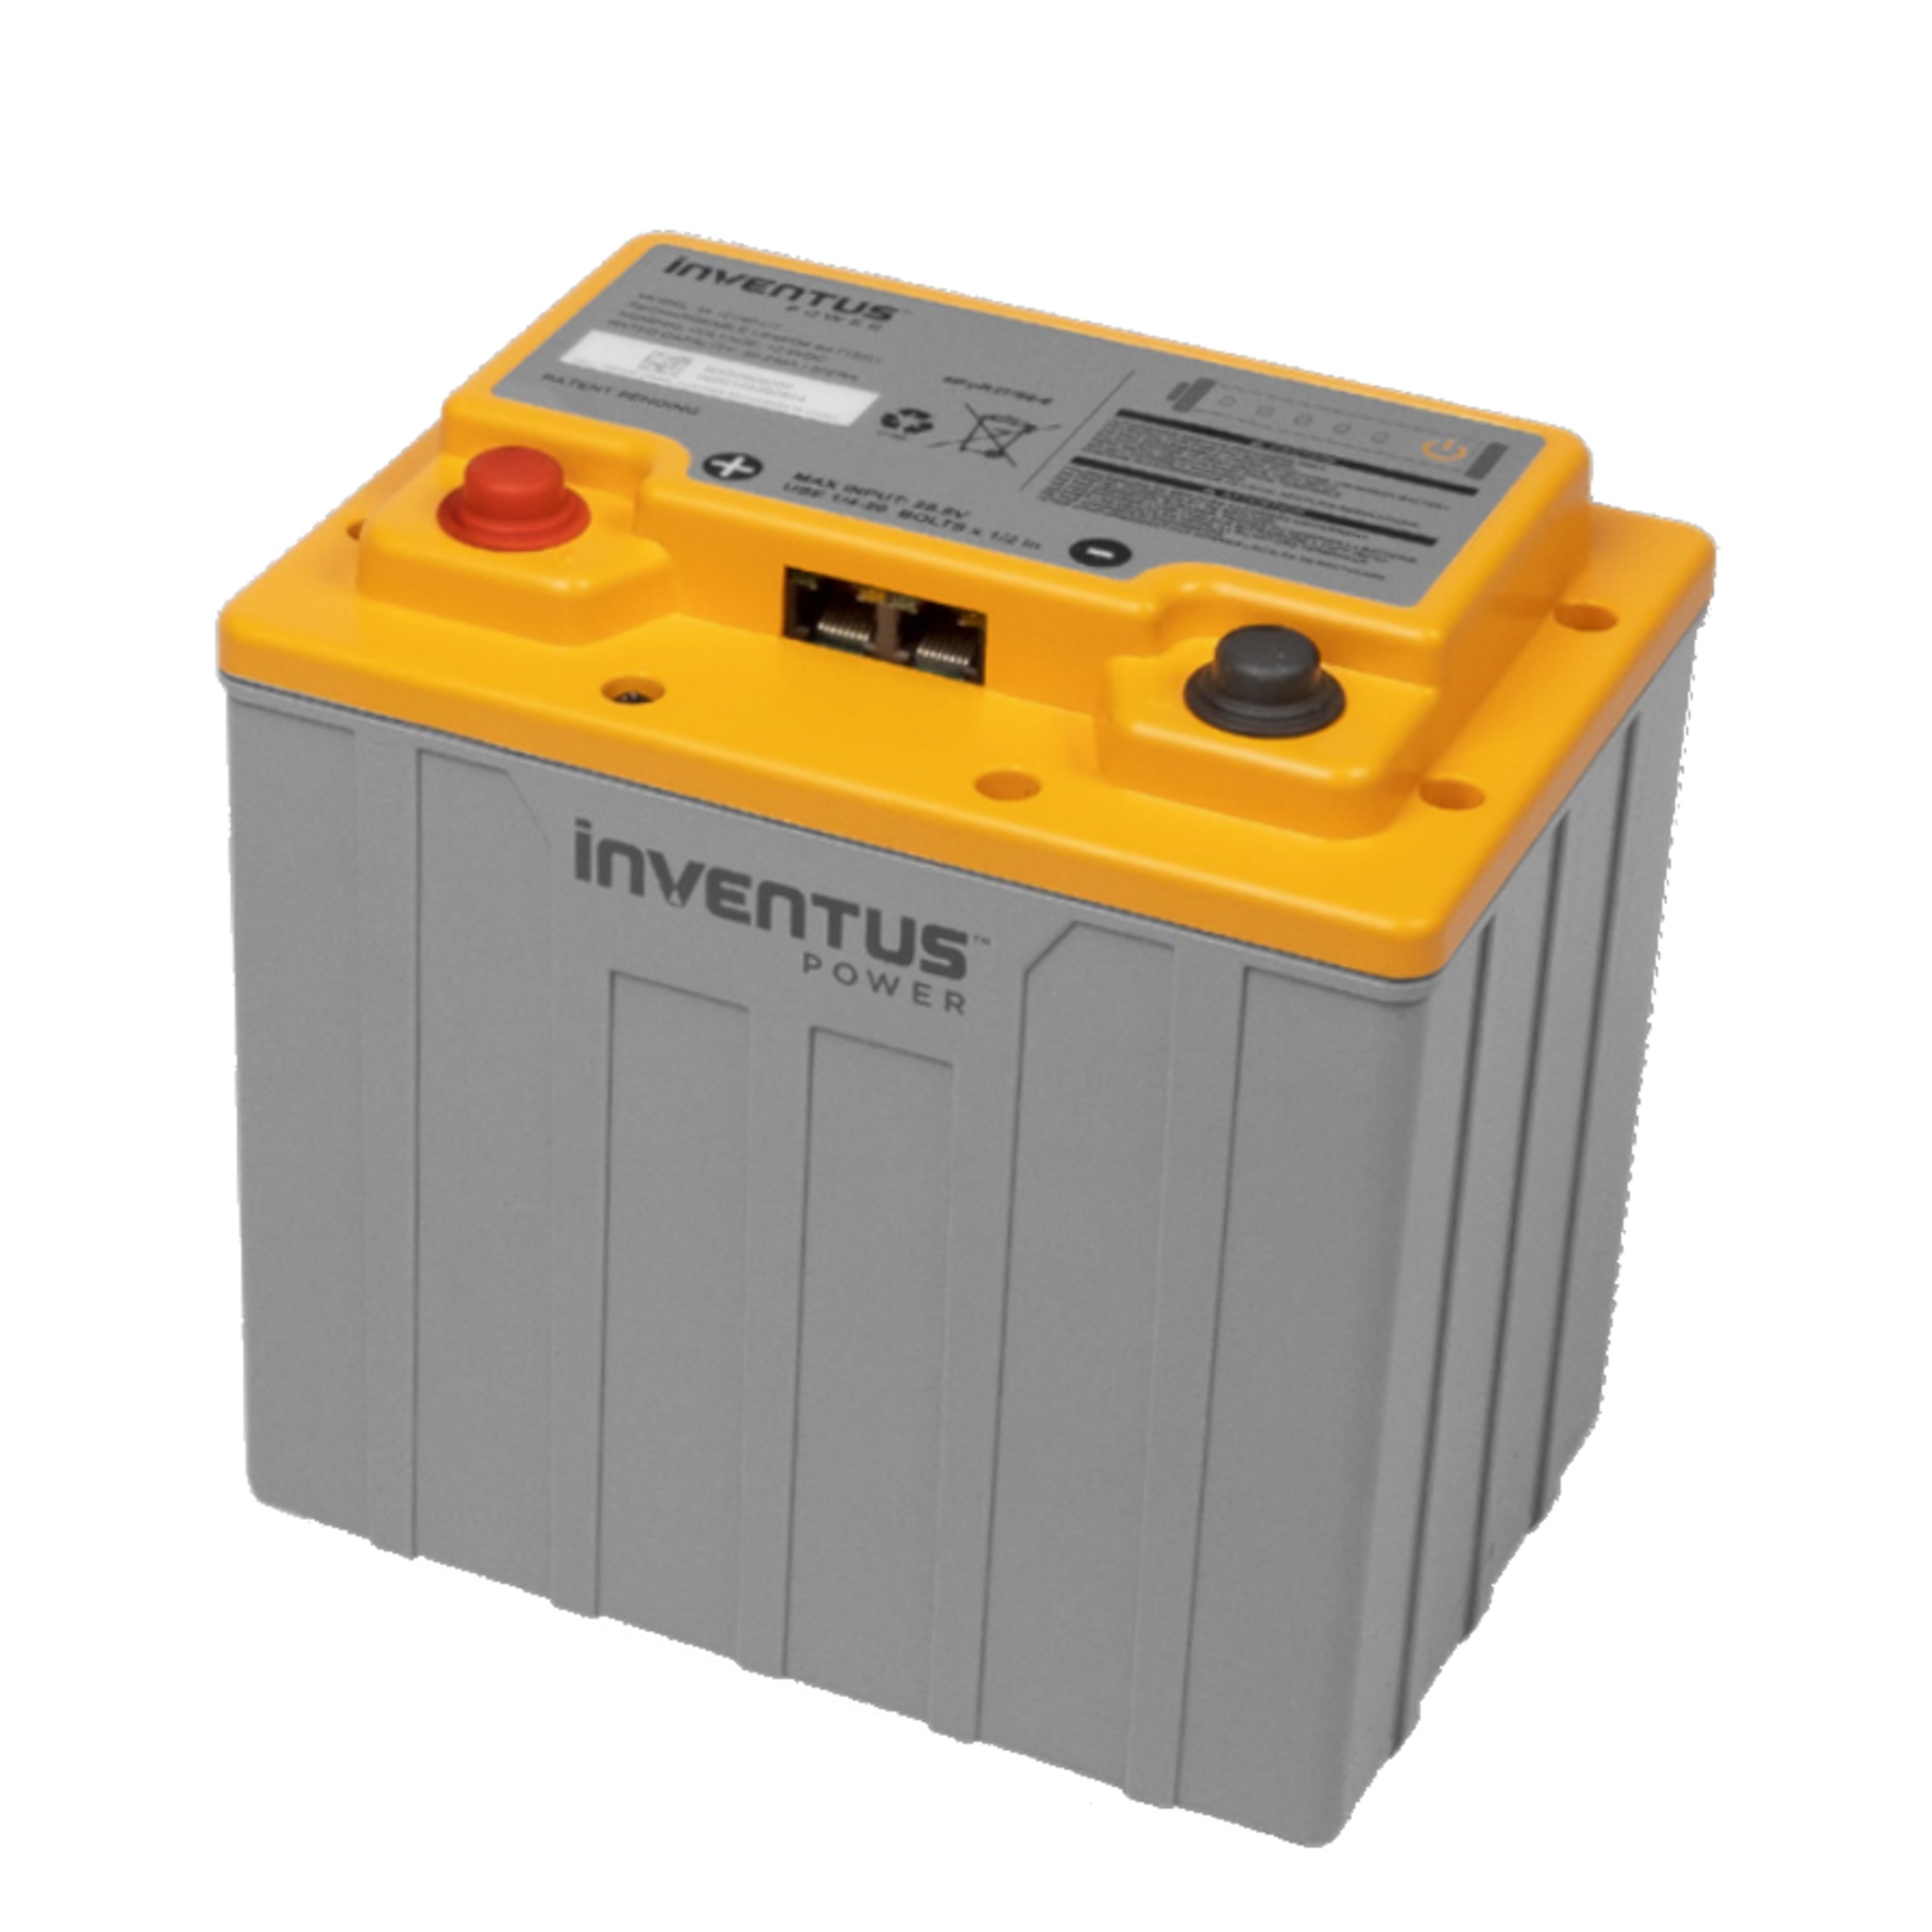 Inventus S-12V40-U1 Lithium Deep Cycle 12V Battery